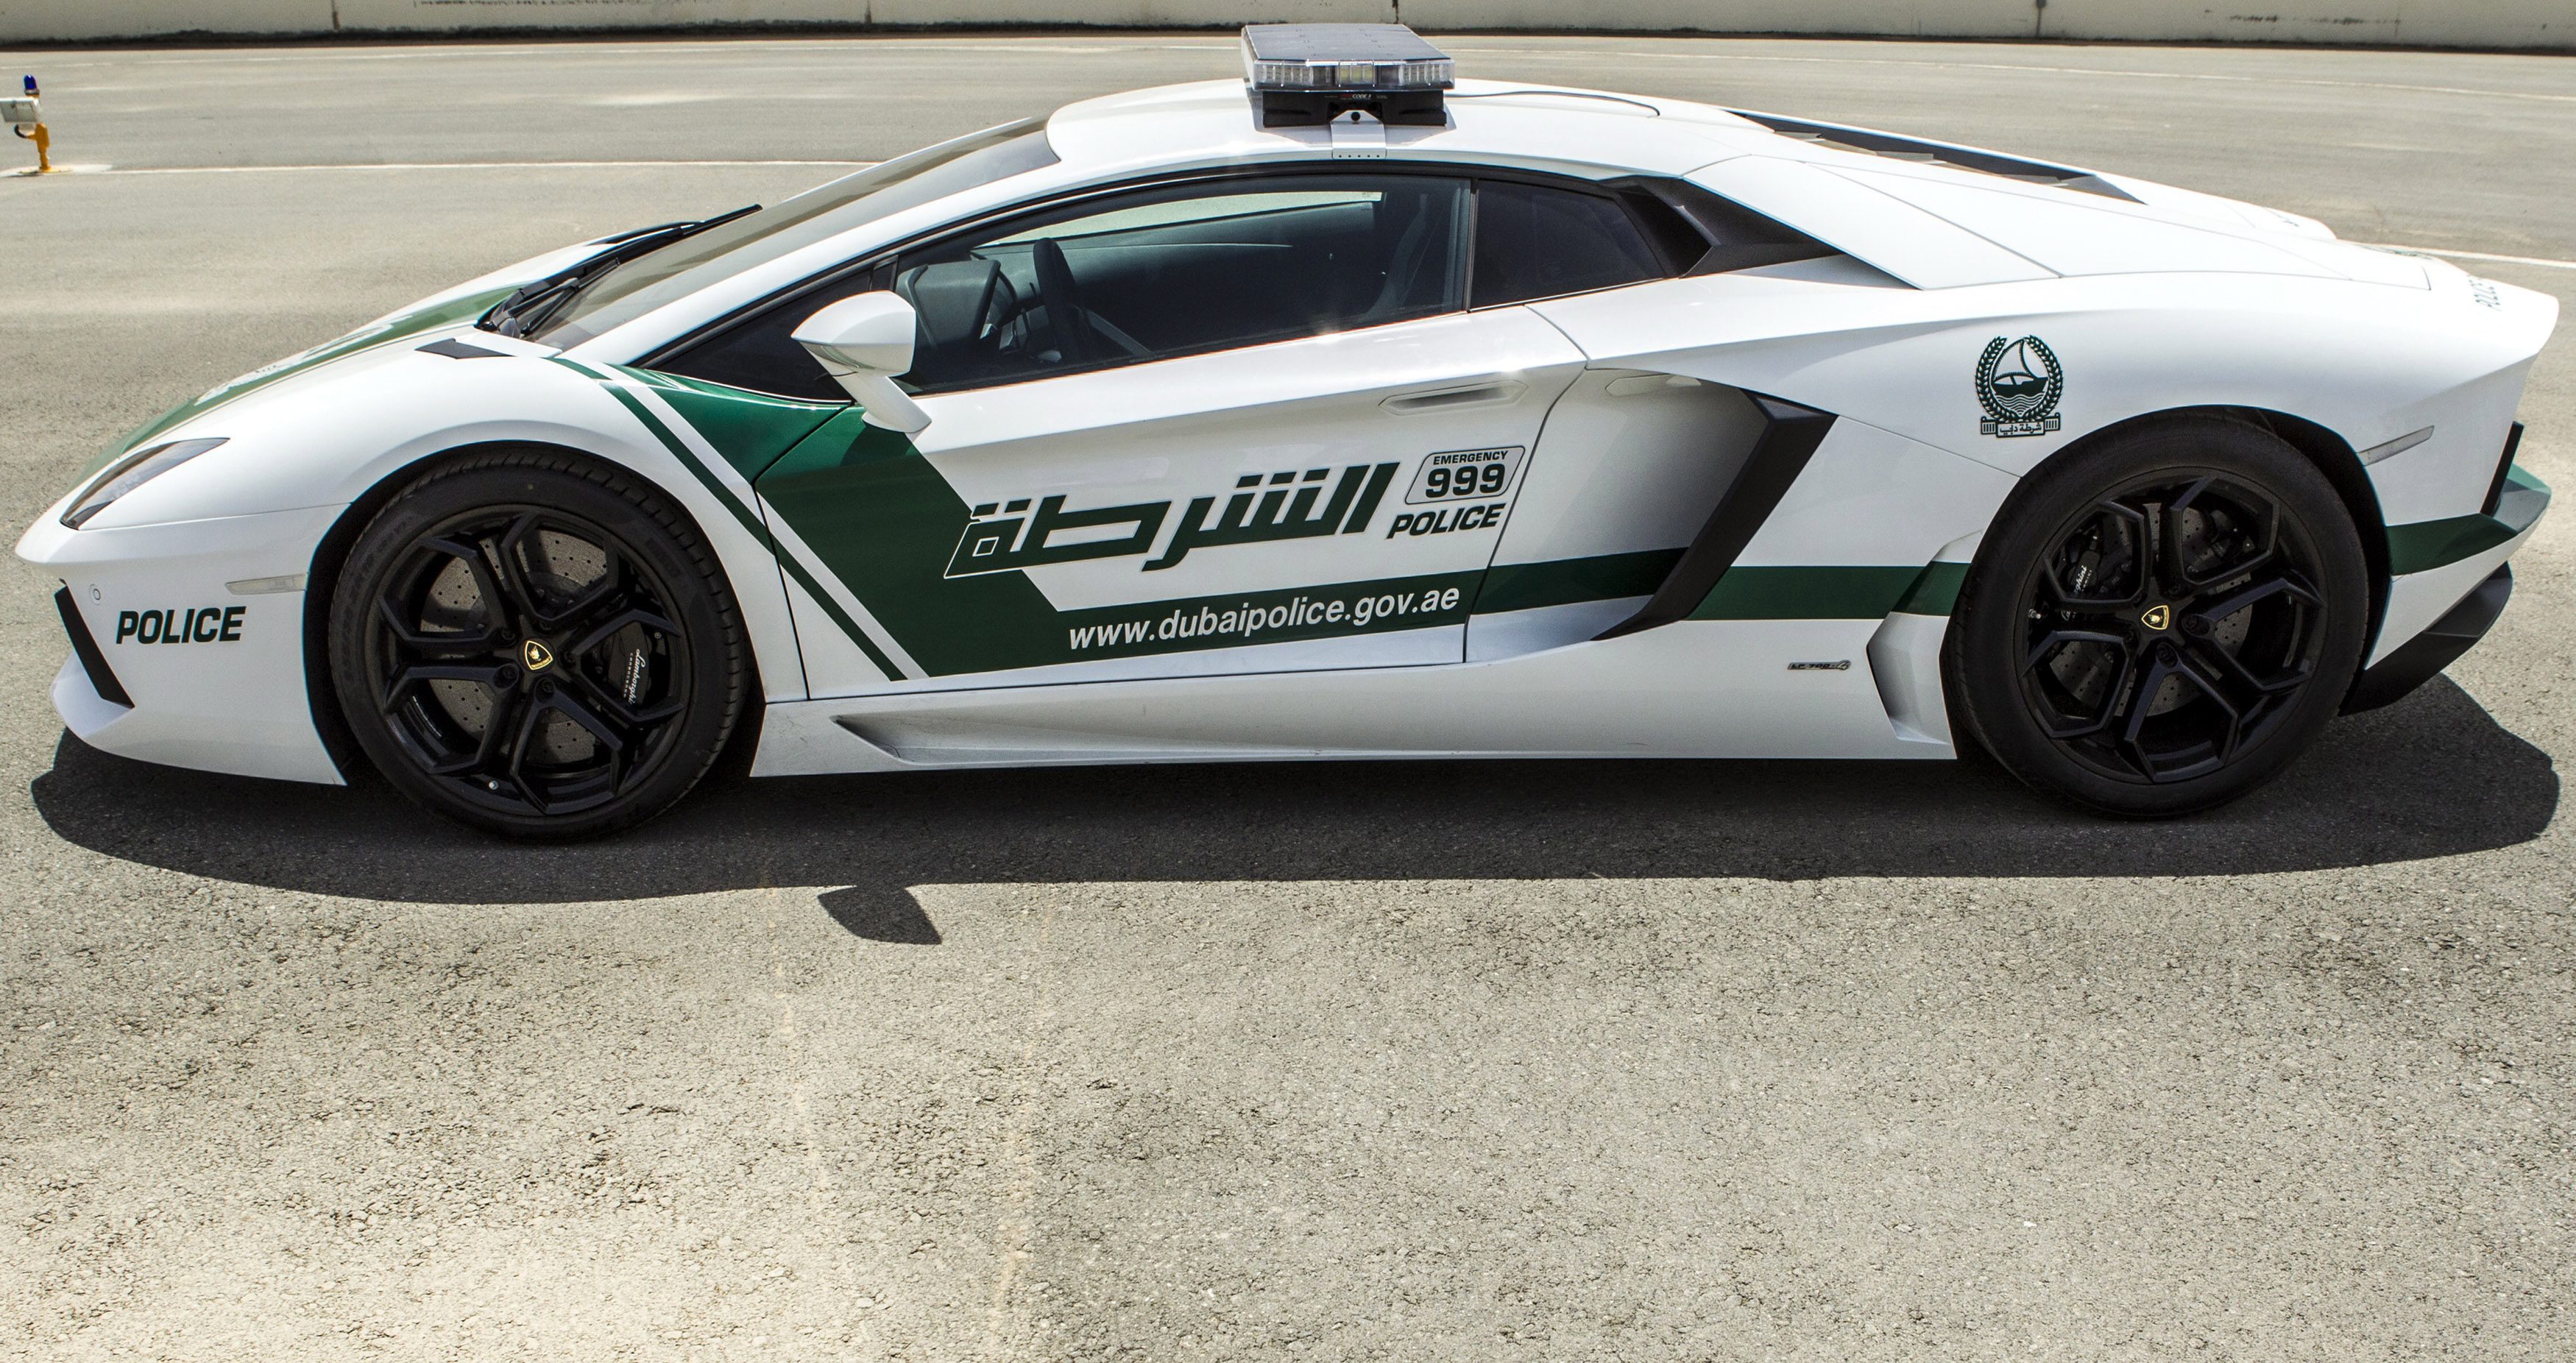 High Resolution Wallpaper | Uae Dubai Police Lamborghini 3500x1852 px